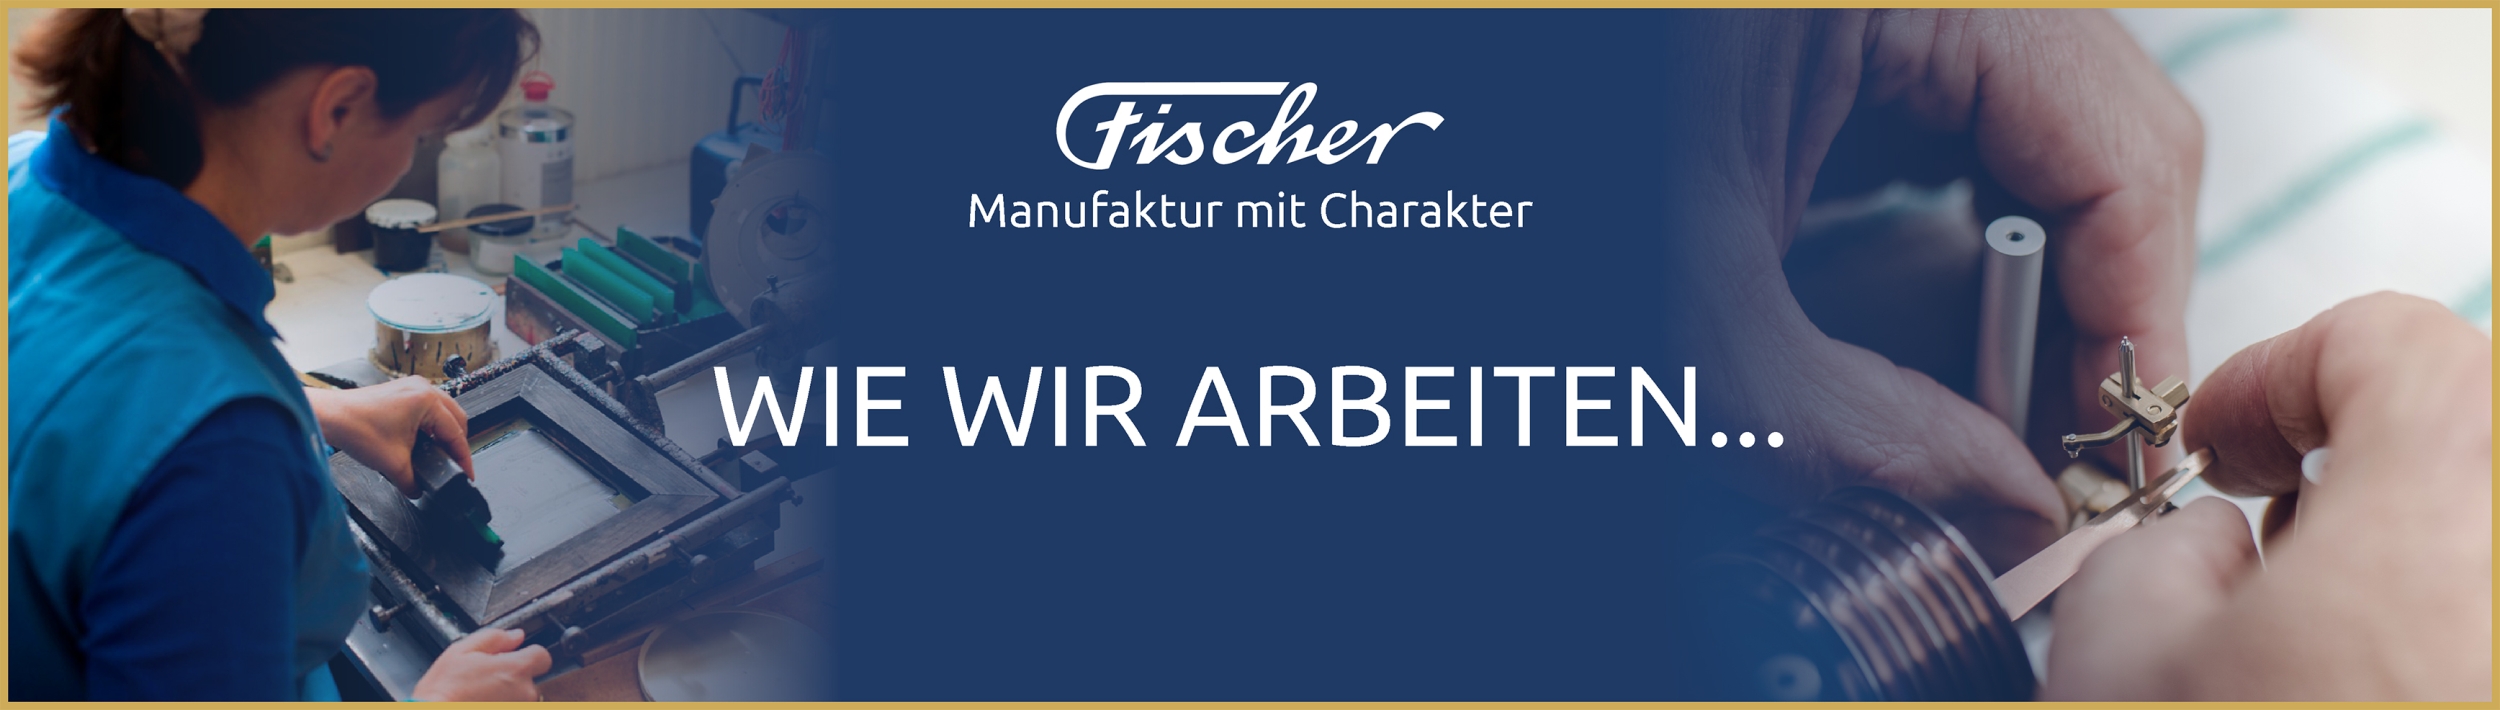 https://fischer-barometer.de/en/fischer/manufactory/#emotion--start